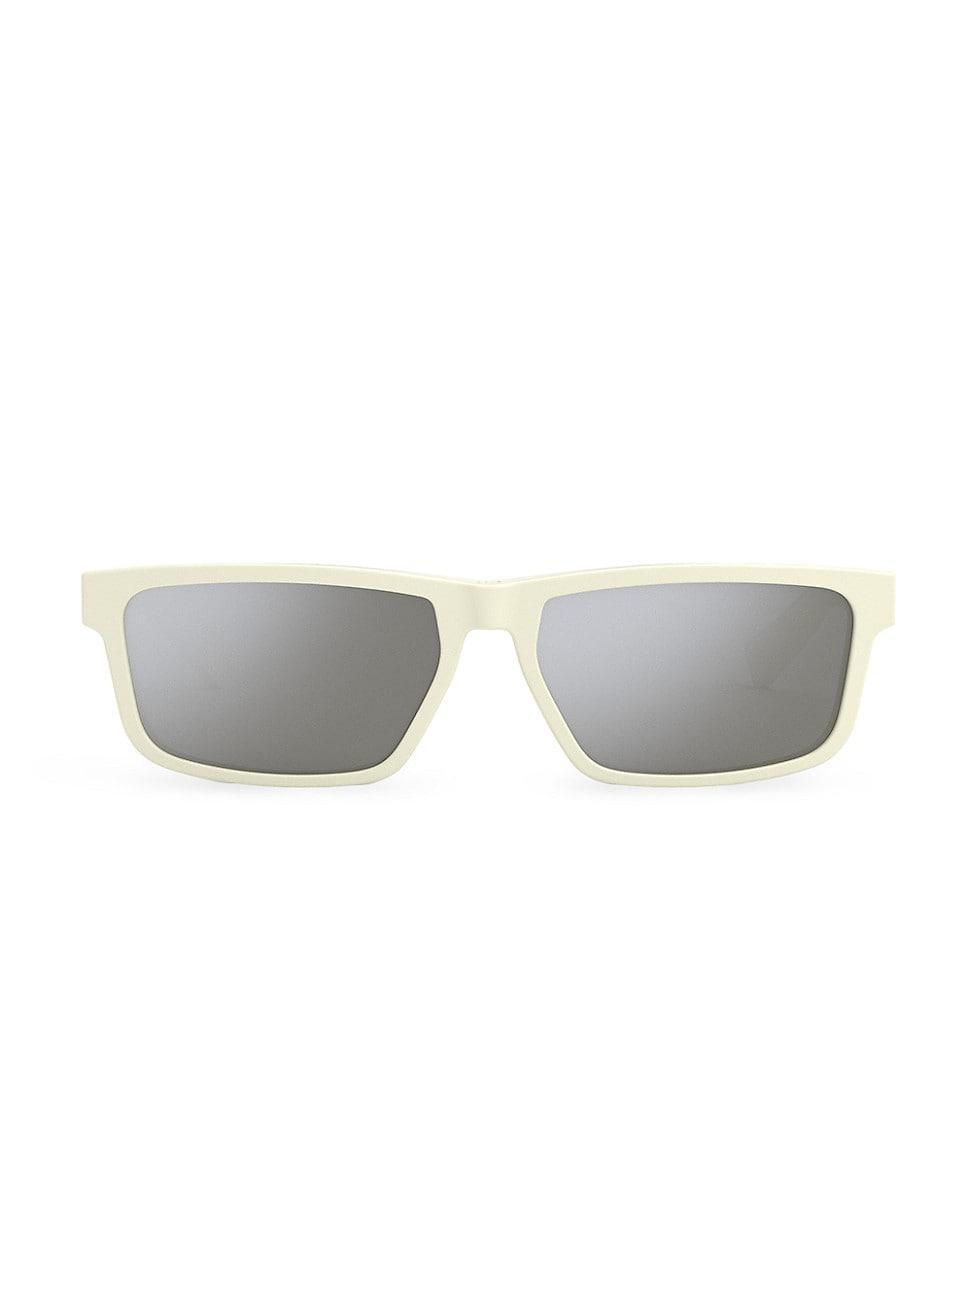 Mens DioRider S2U 57MM Rectangular Sunglasses Product Image